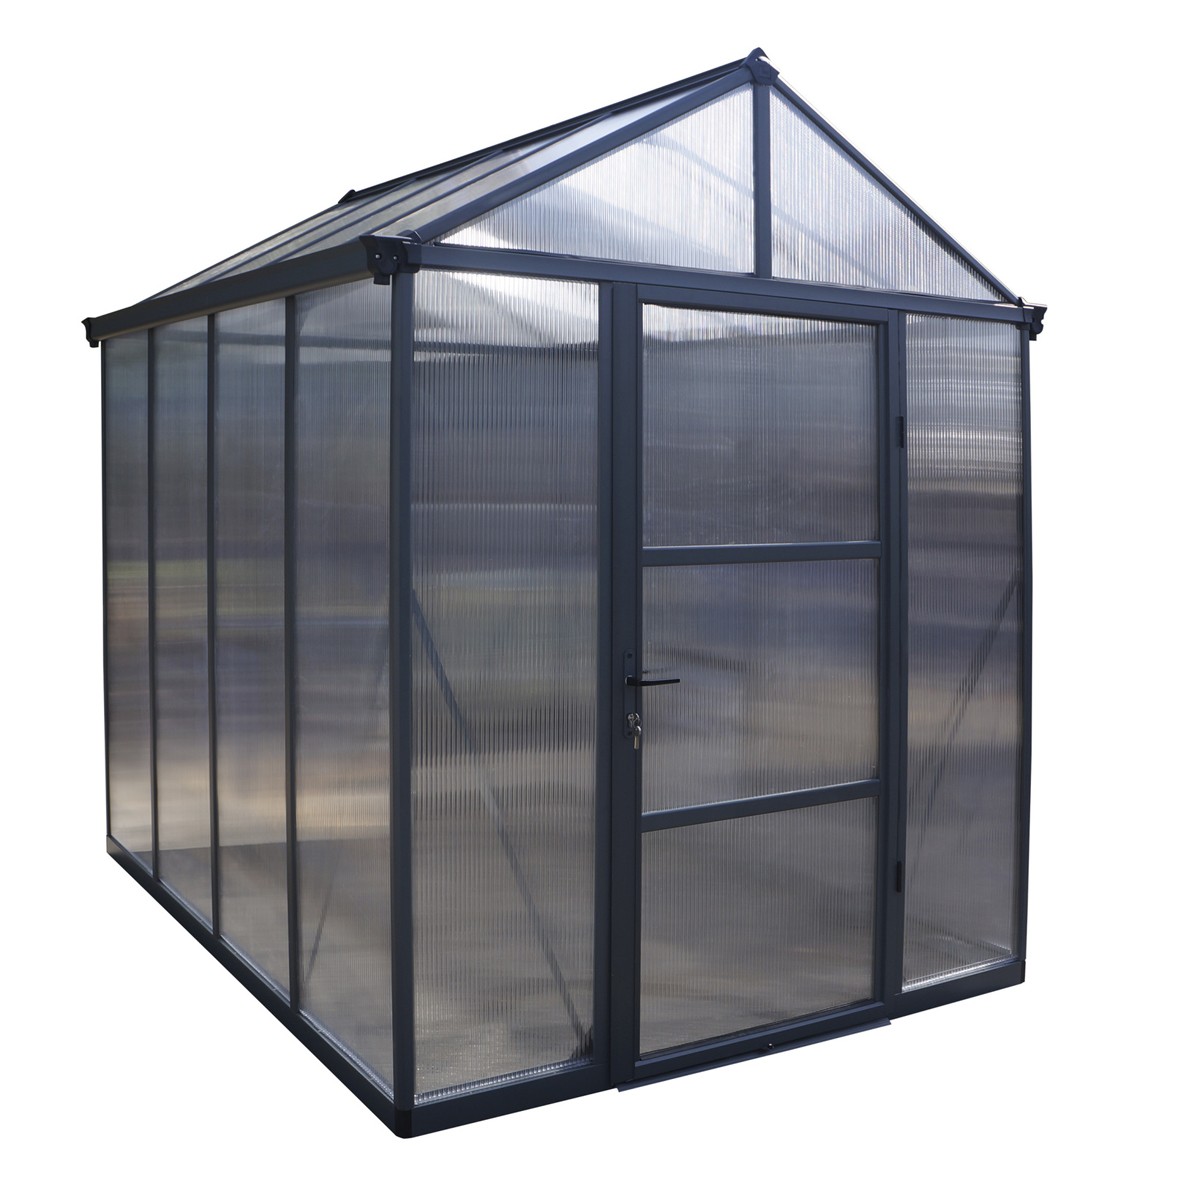 Palram - Canopia Glory 6' x 8' Greenhouse